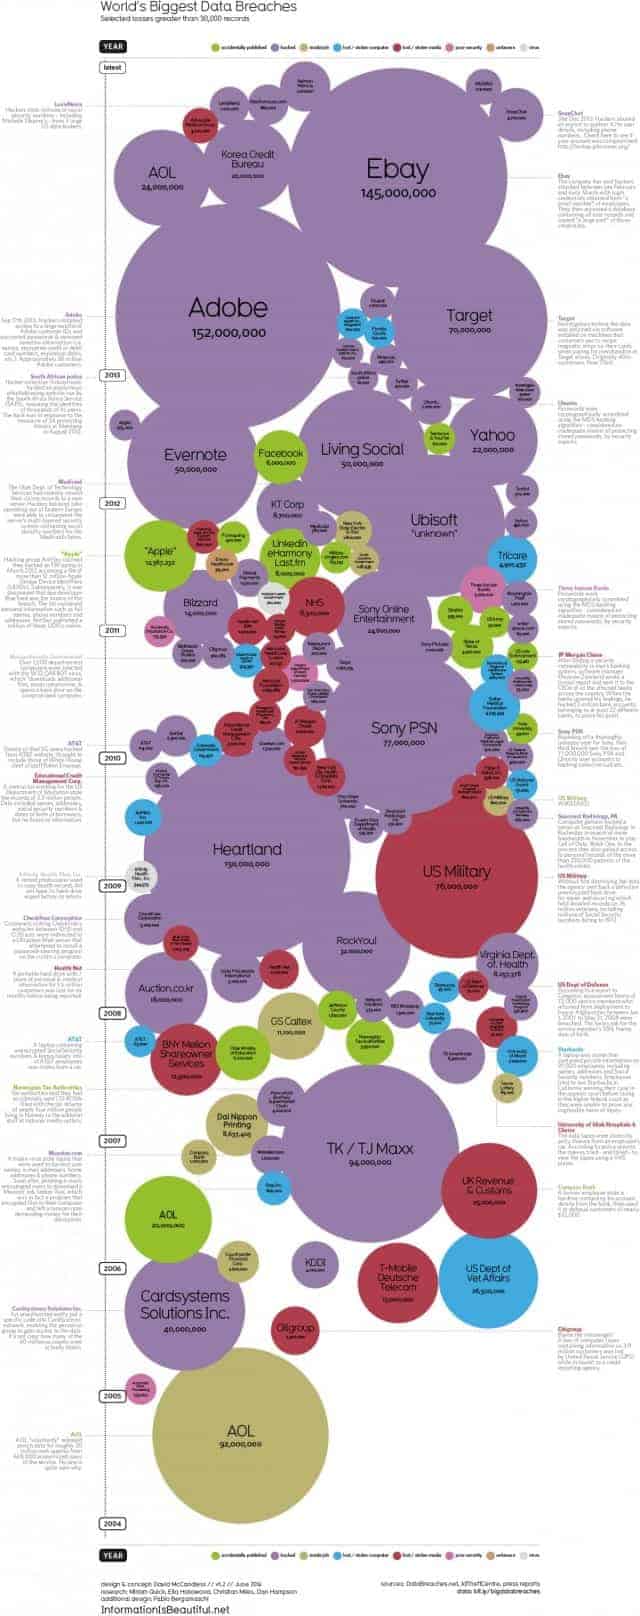 World’s Biggest Data Breaches Infographic